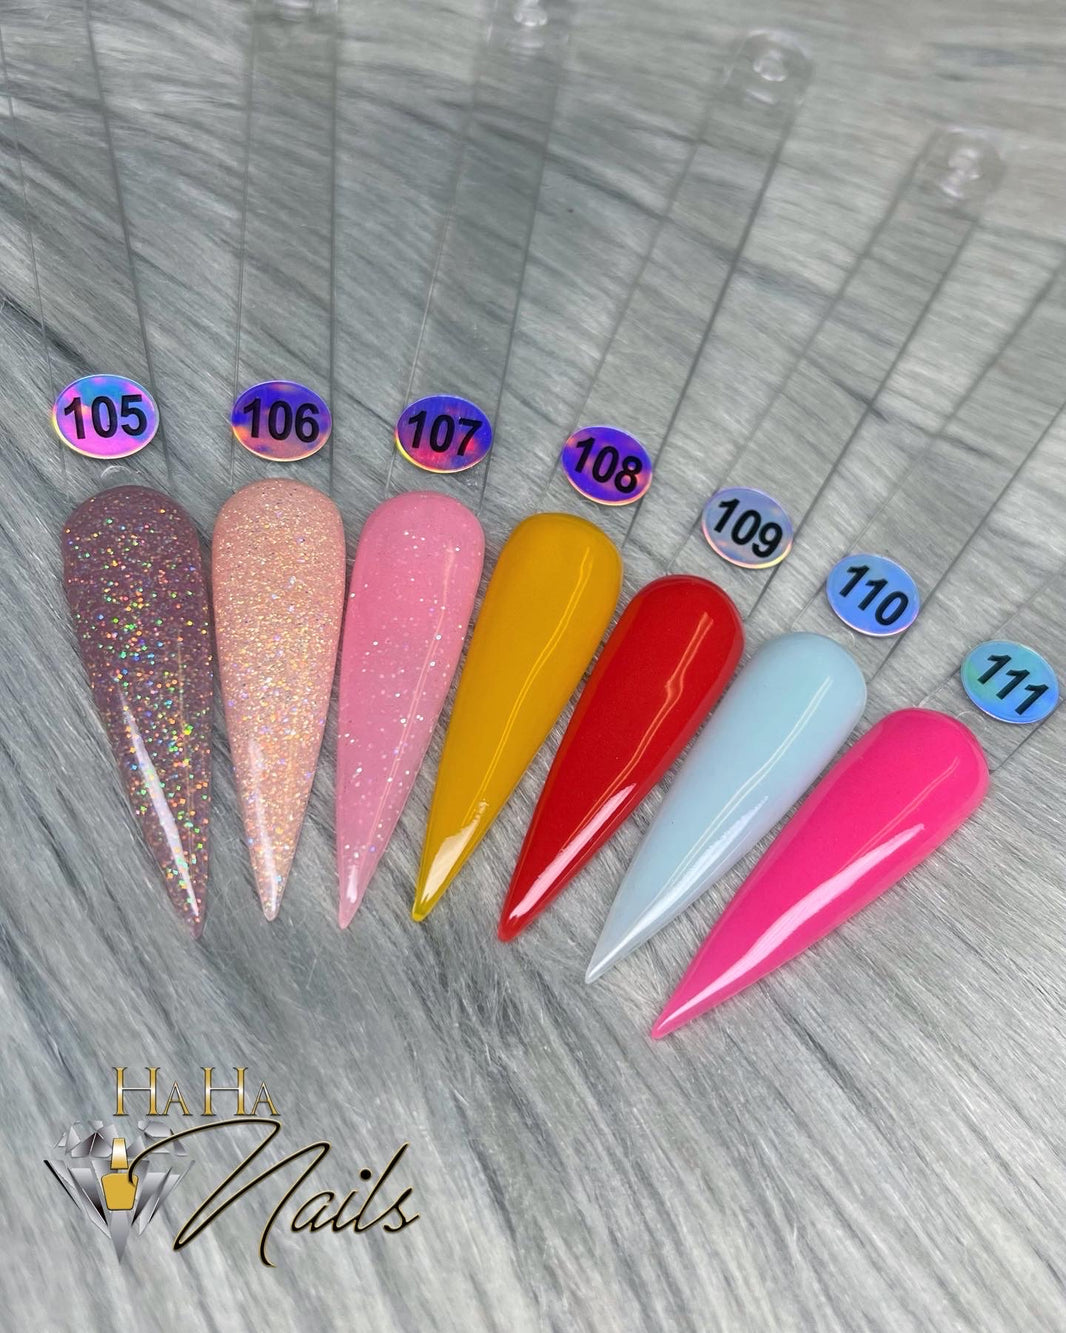 HaHa Nails 2 in 1 colored acrylic powders – Hahanails